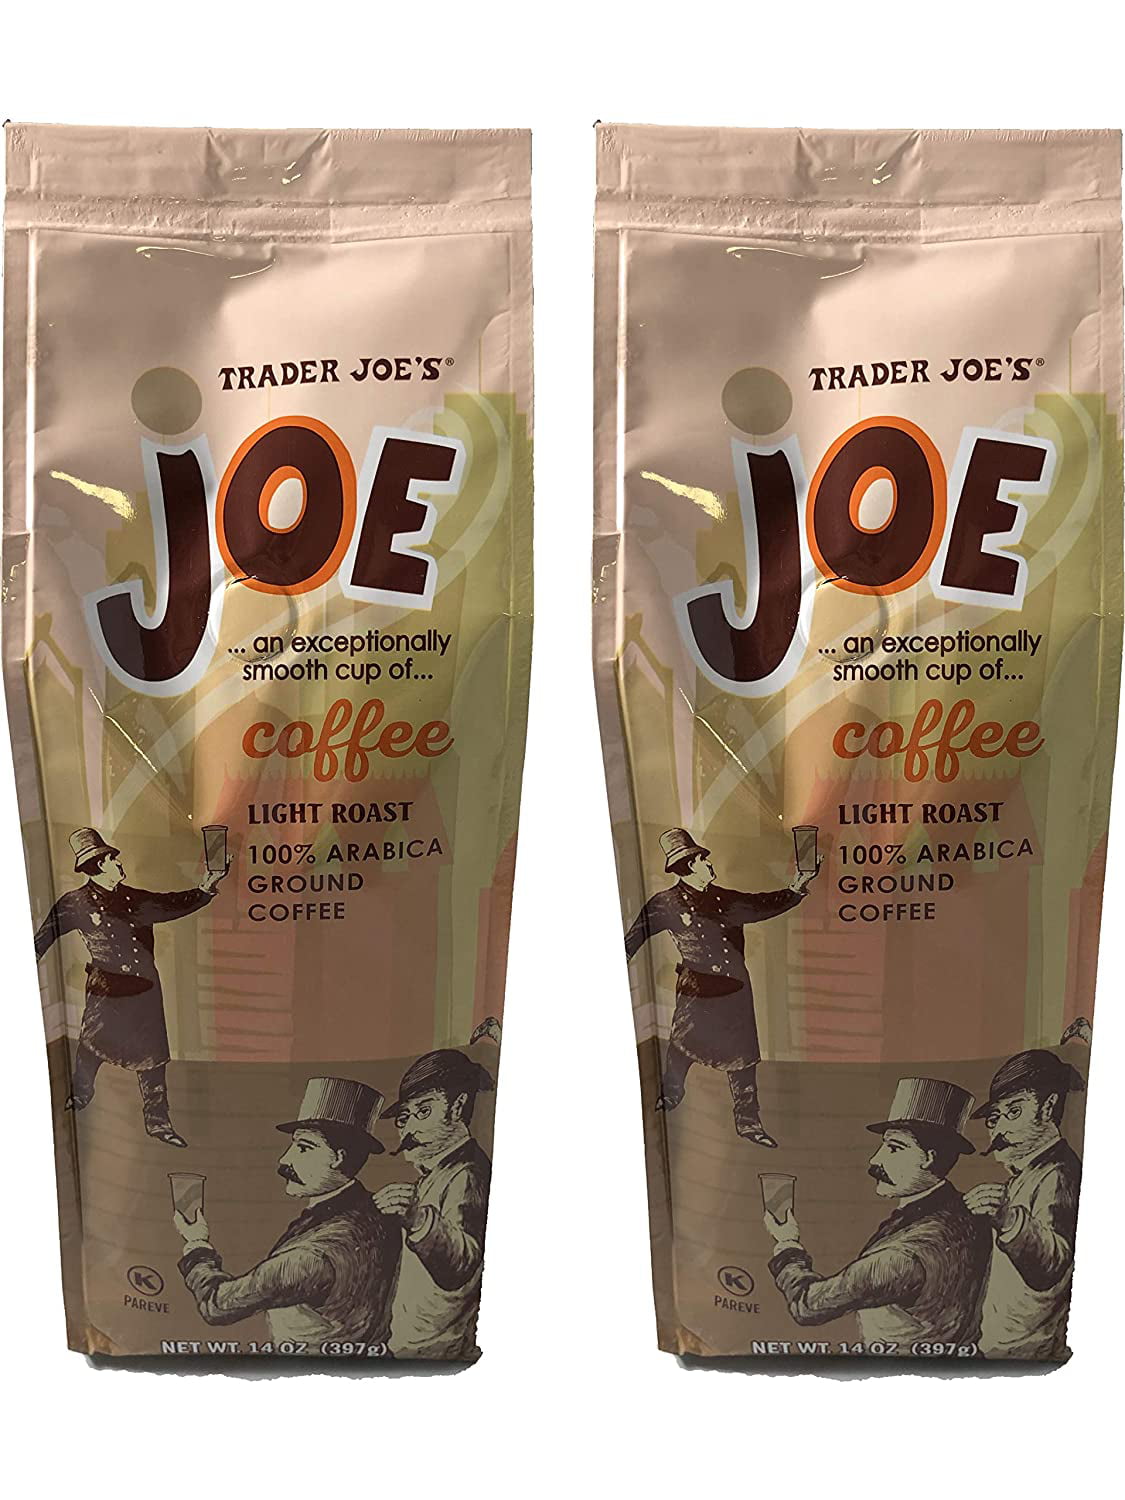 Trader Joeâ€™s Joe Light Roast Ground Coffee 100 Arabica